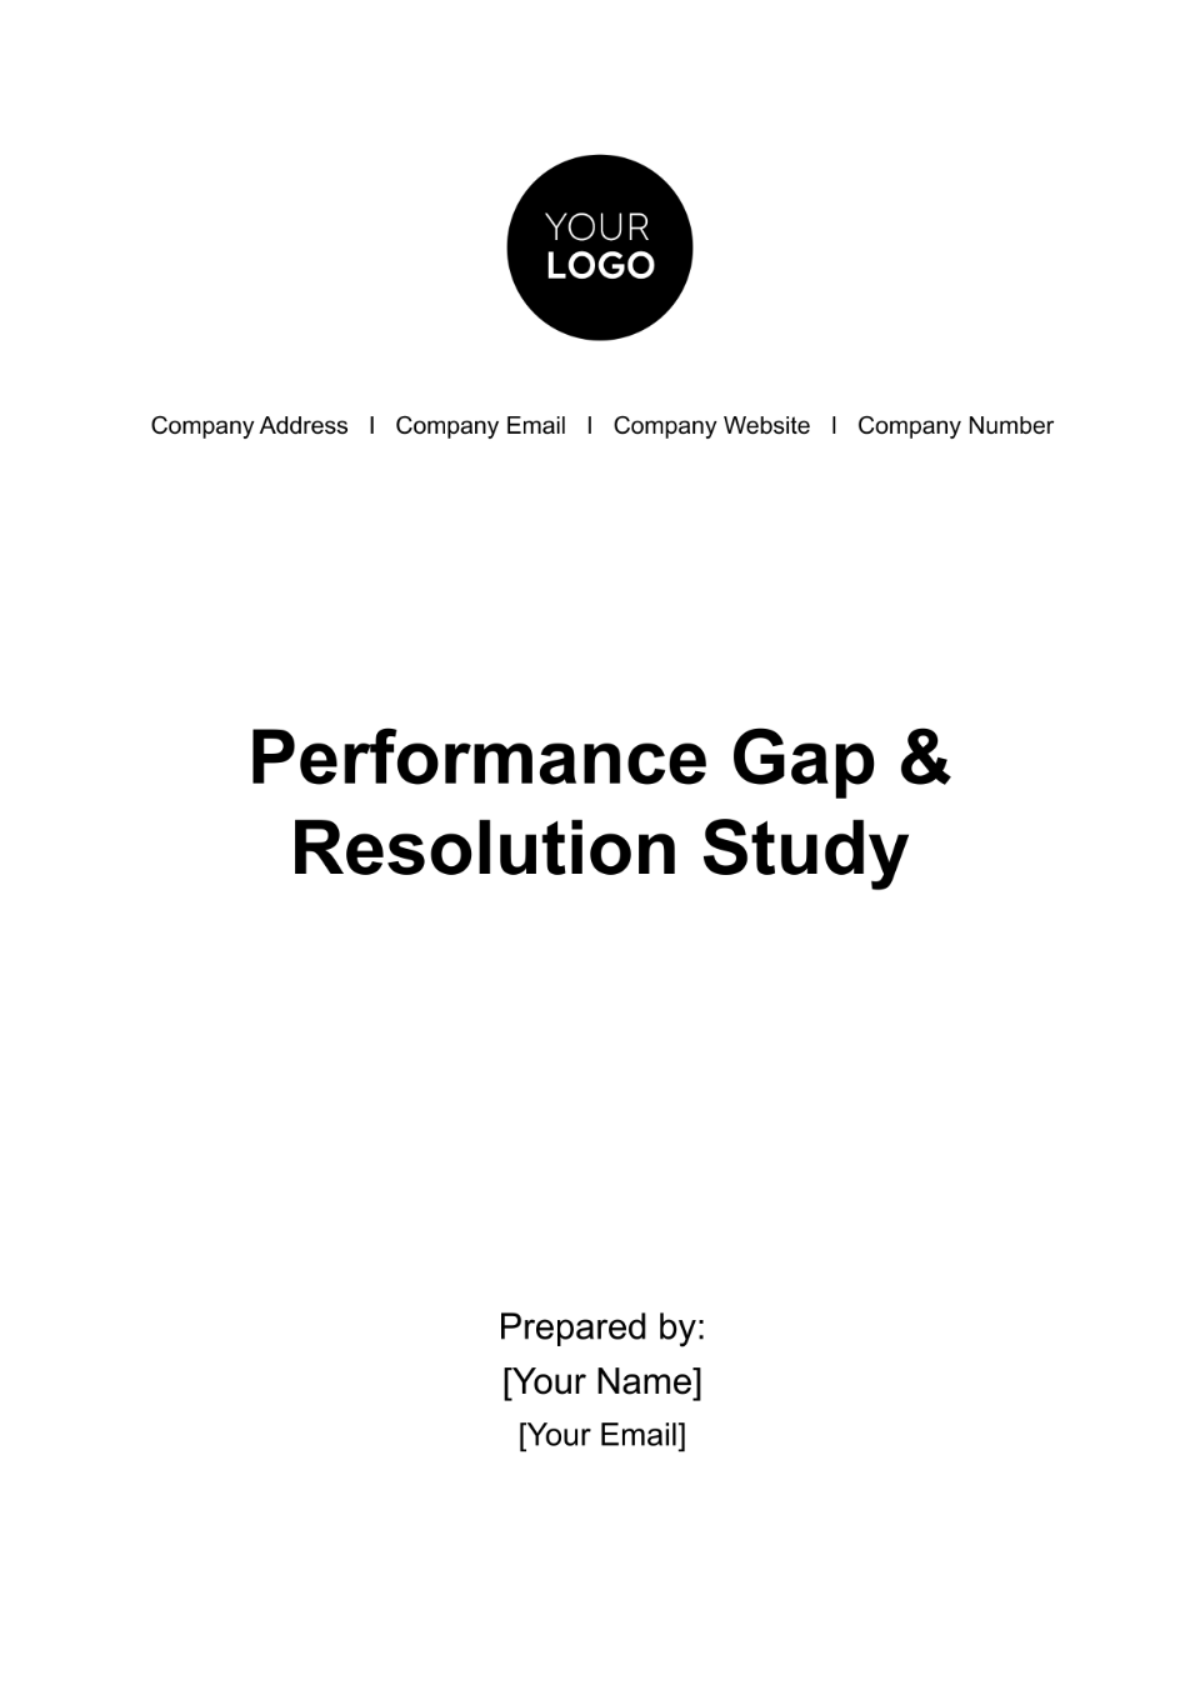 Free Performance Gap & Resolution Study HR Template